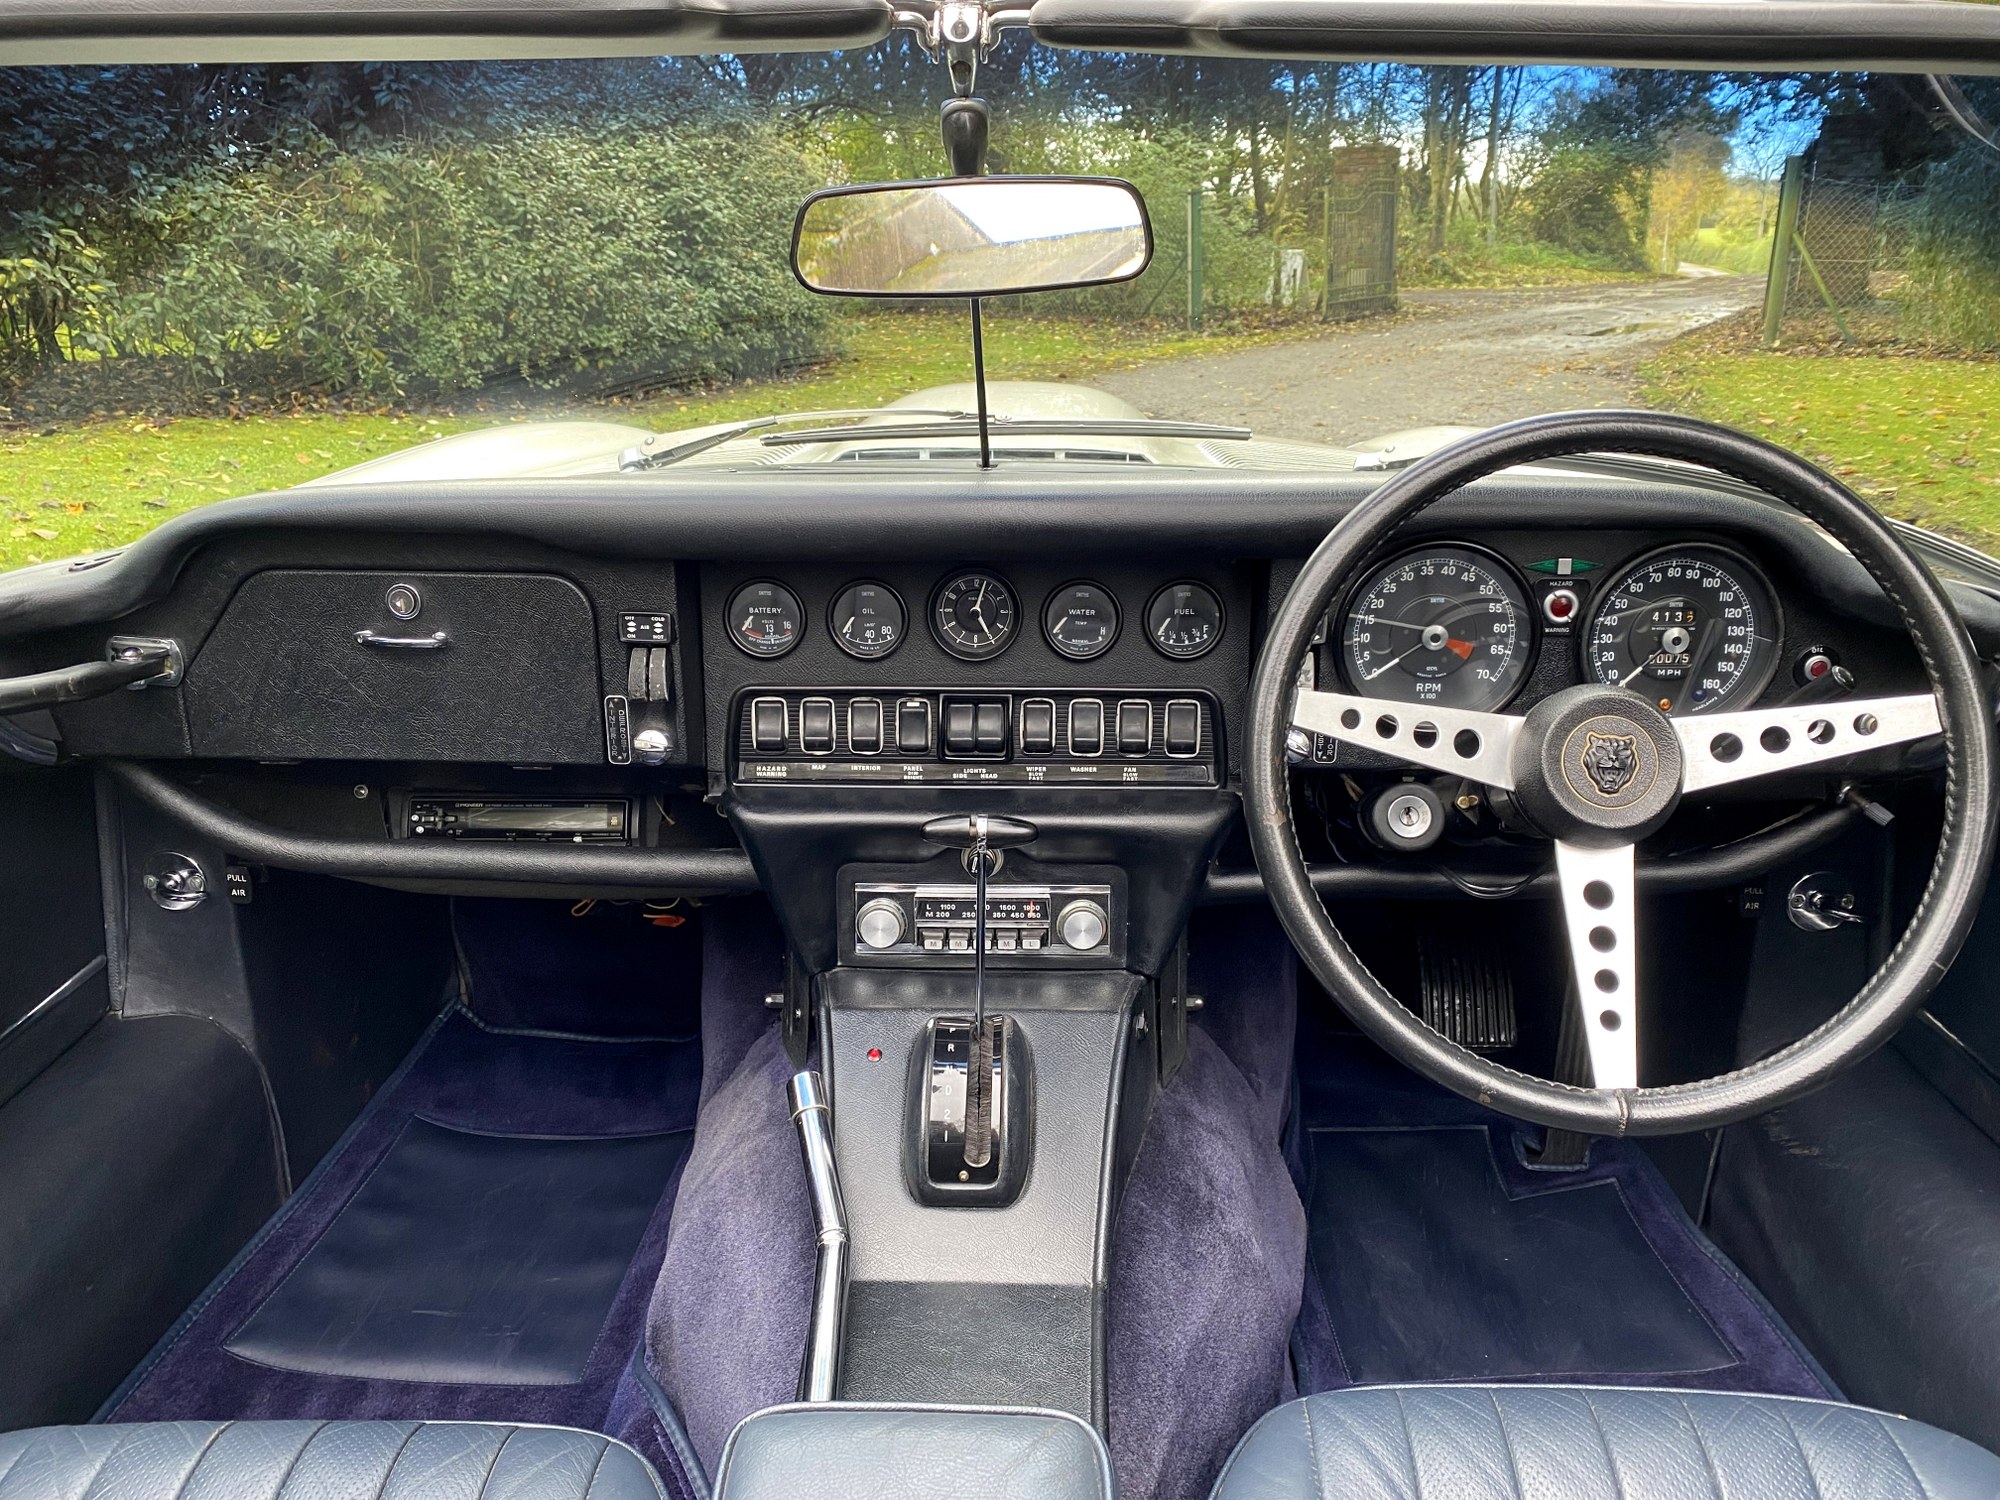 Jaguar E-Type V12 dashboard